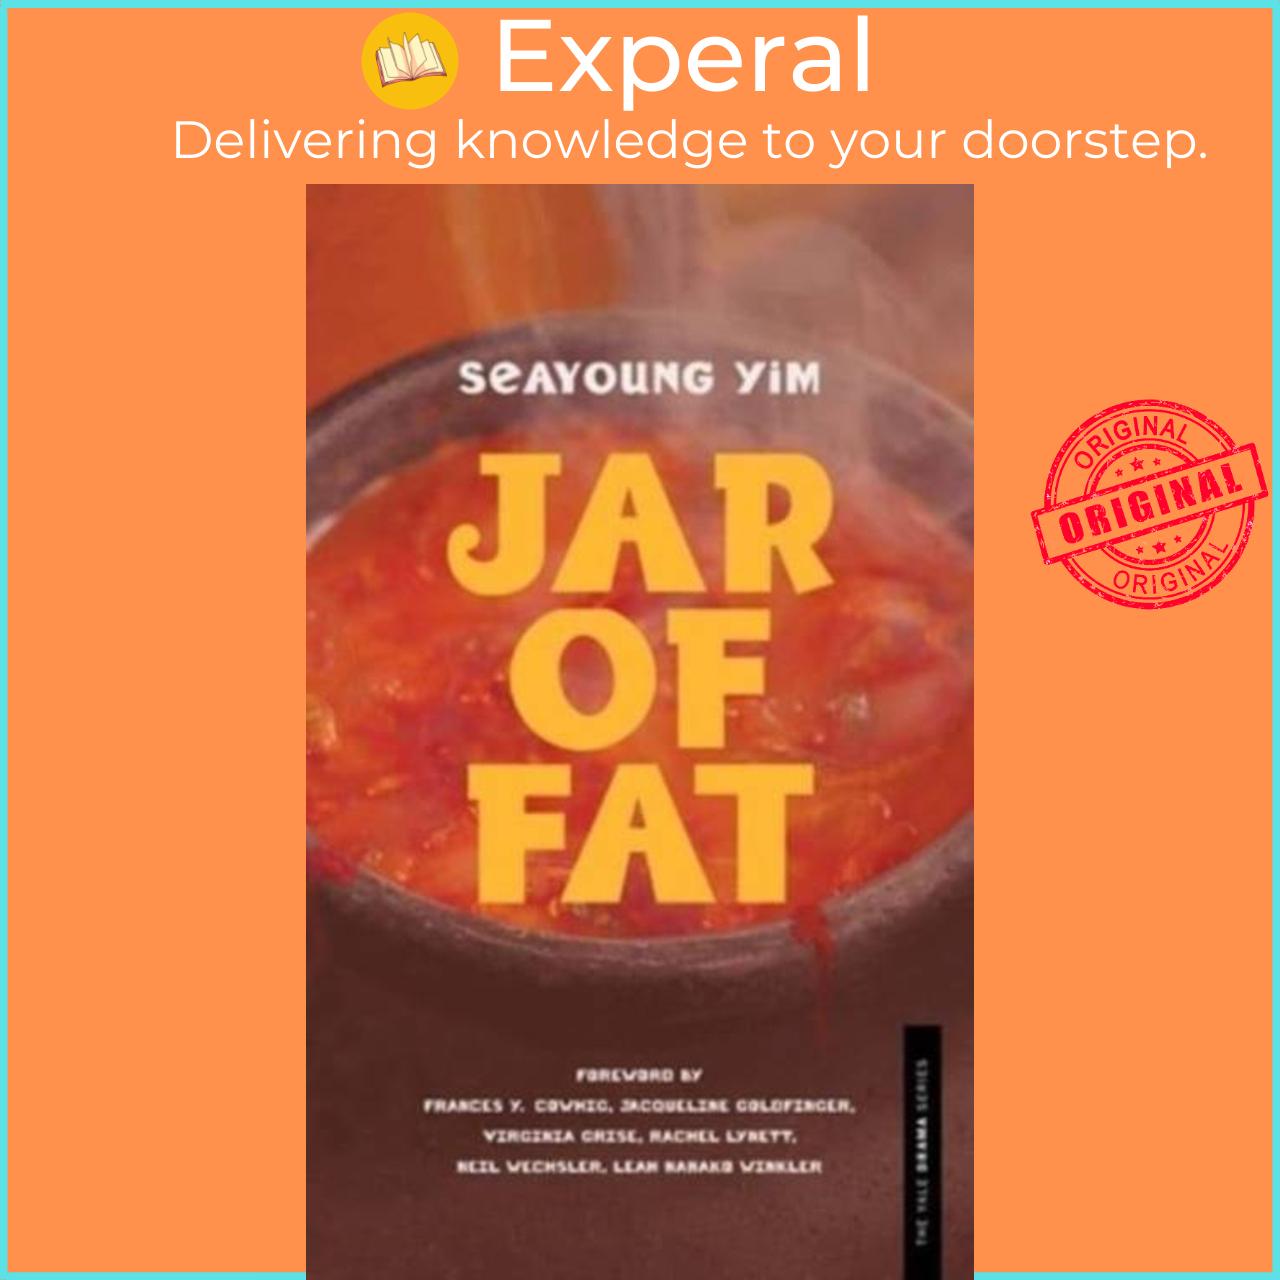 Hình ảnh Sách - Jar of Fat by Seayoung Yim (UK edition, paperback)